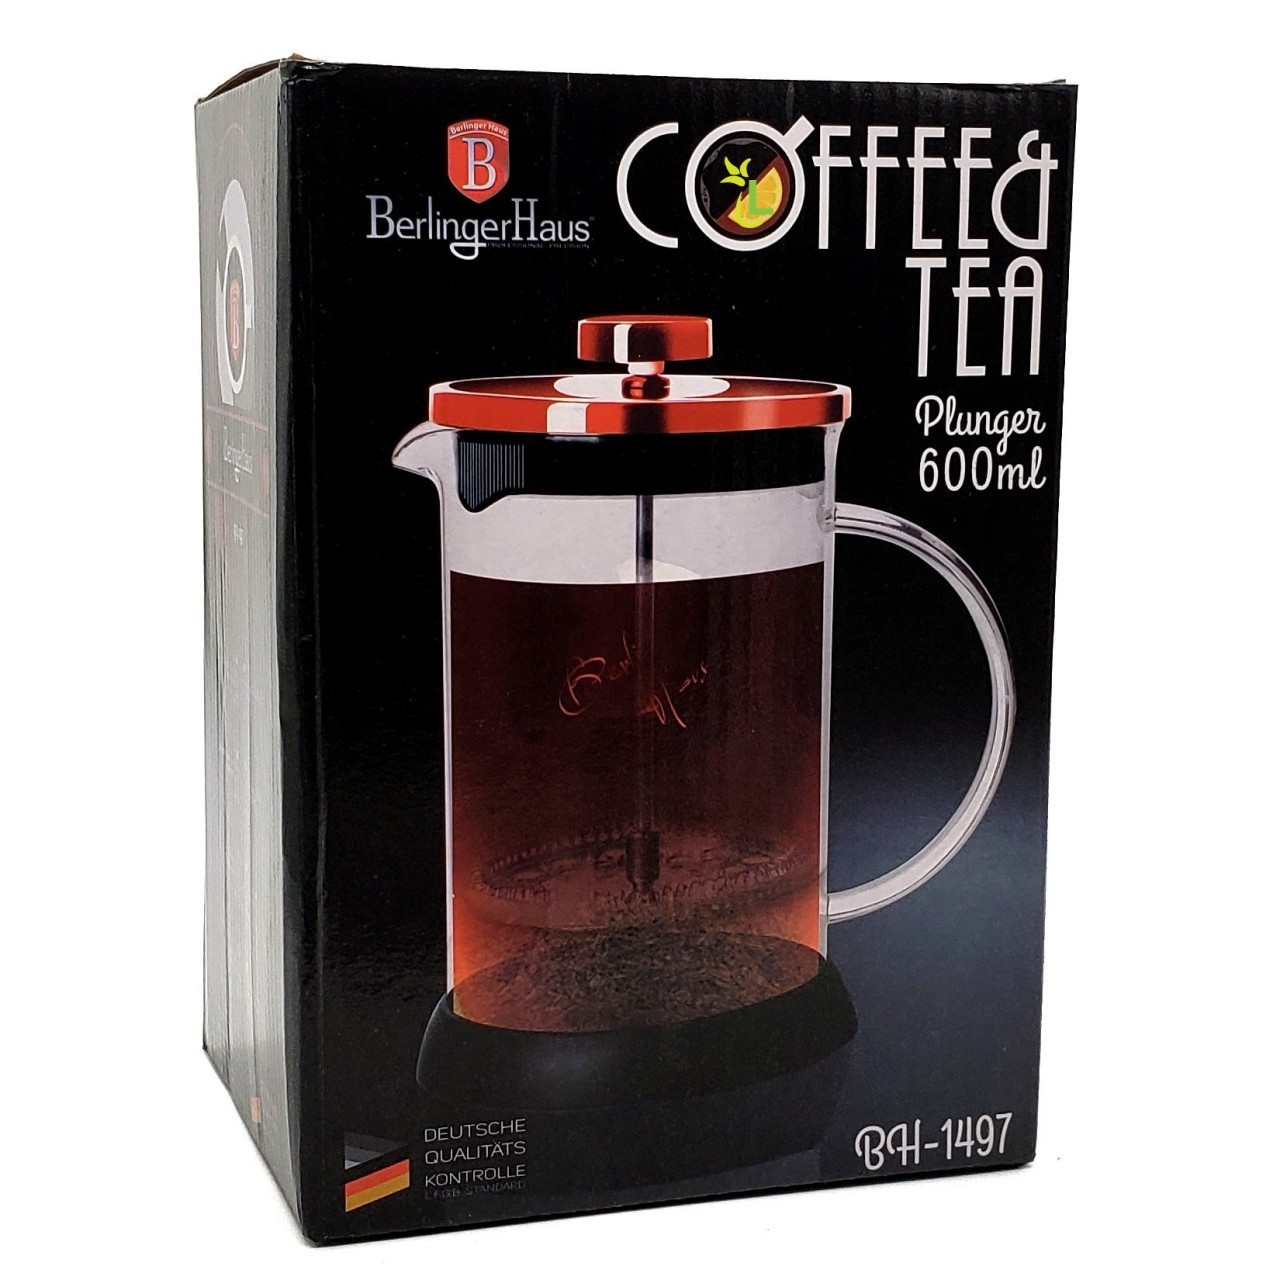 BERLINGER HAUS COFFEE PLUNGER 600ml